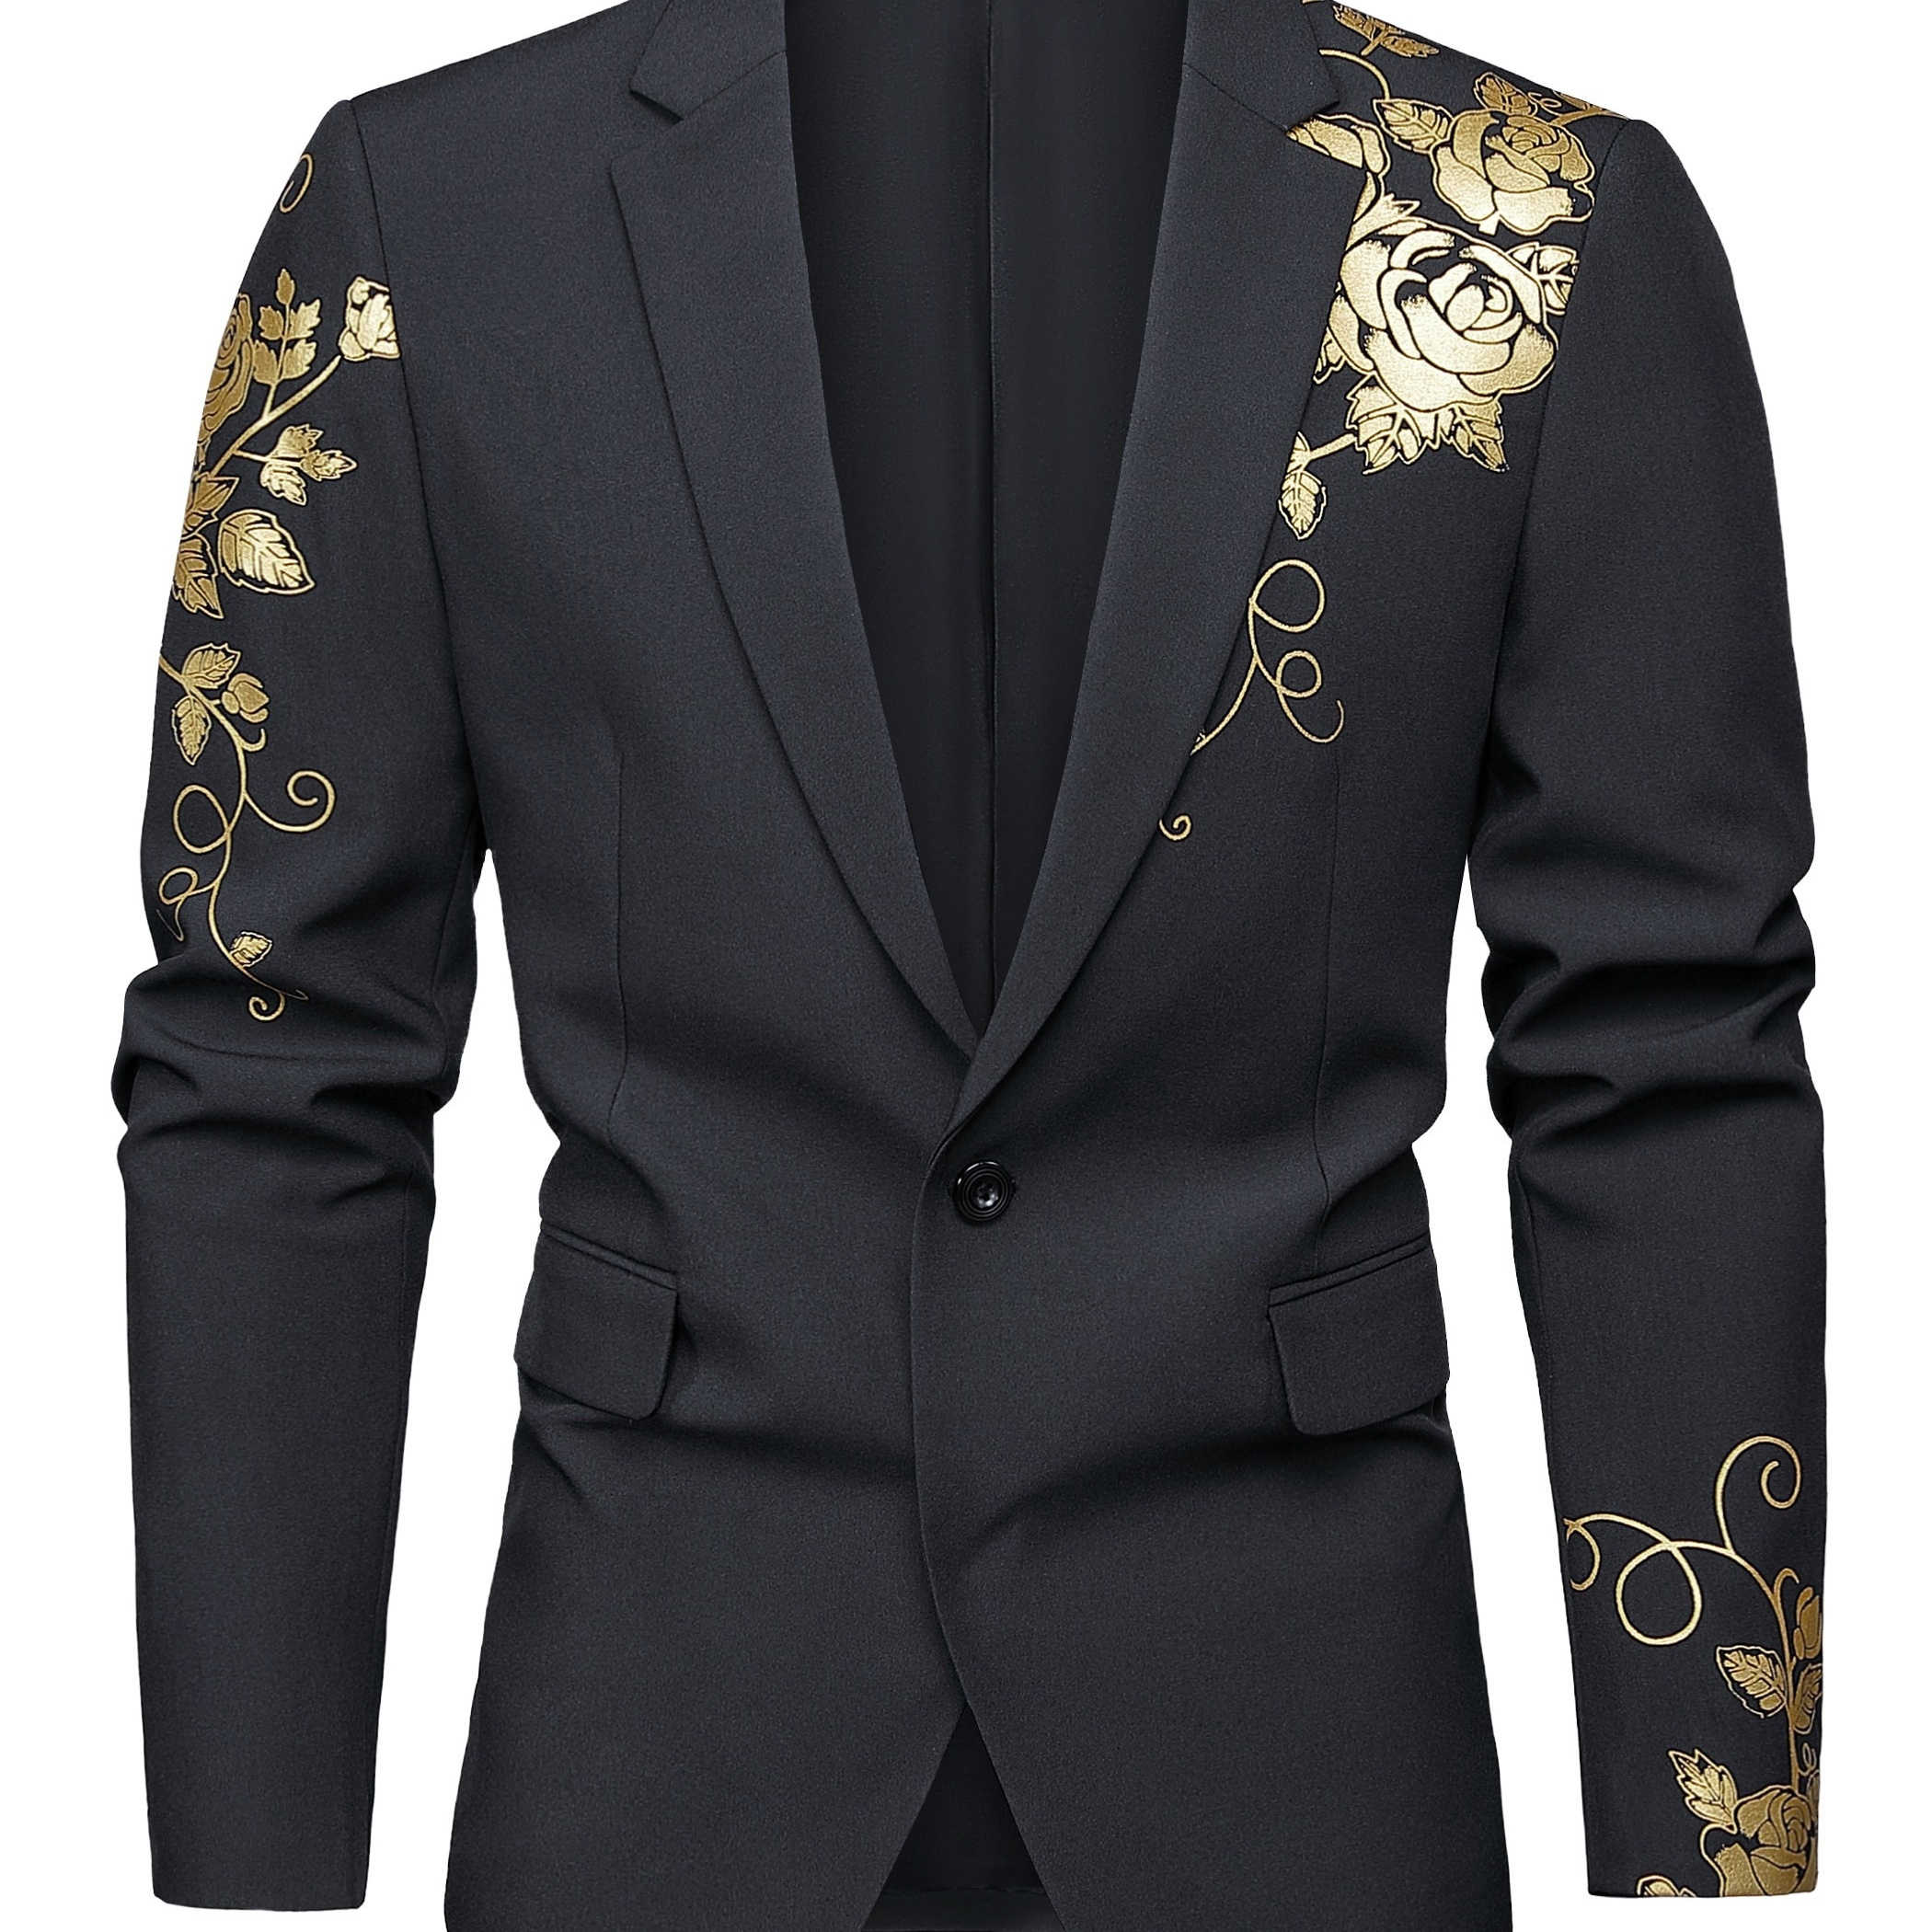 

Men's Floral Pattern Stylish Suit Jacket, One-button Suit Blazer For Leisure Party